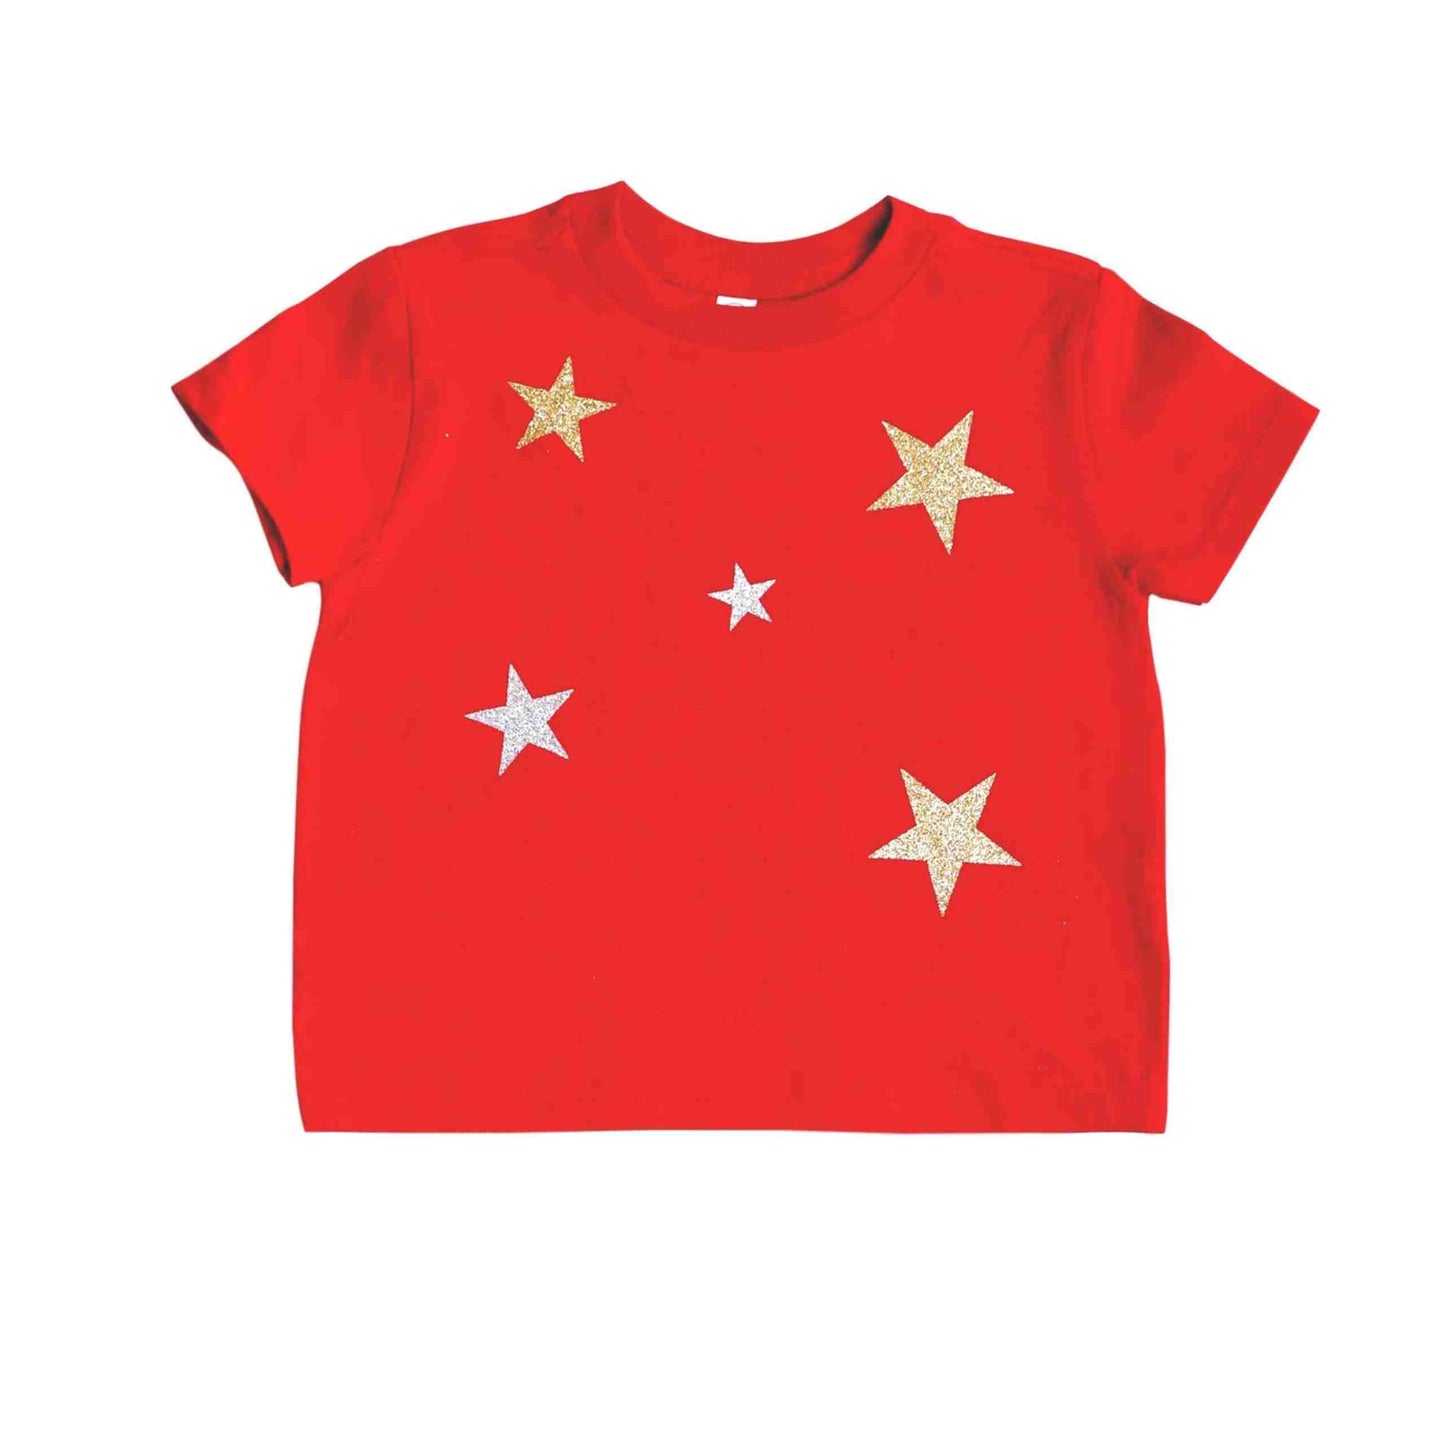 All Star Superhero T-Shirt, Red